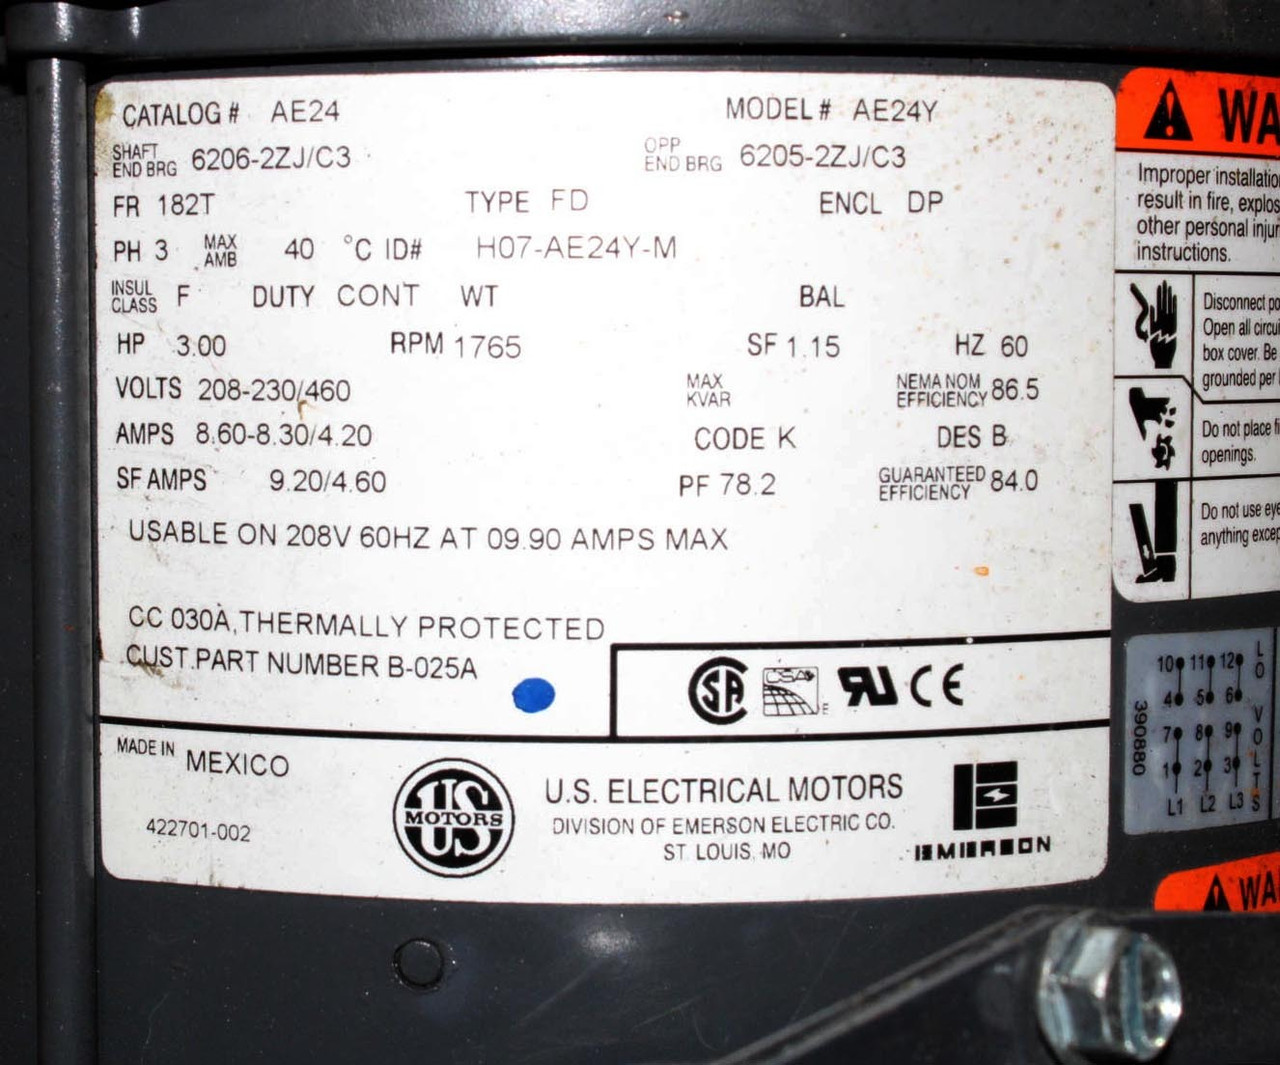 U.S. Electrical Motors AE24Y Energy Efficient Motor 3HP 3PH 230/460V 1765RPM